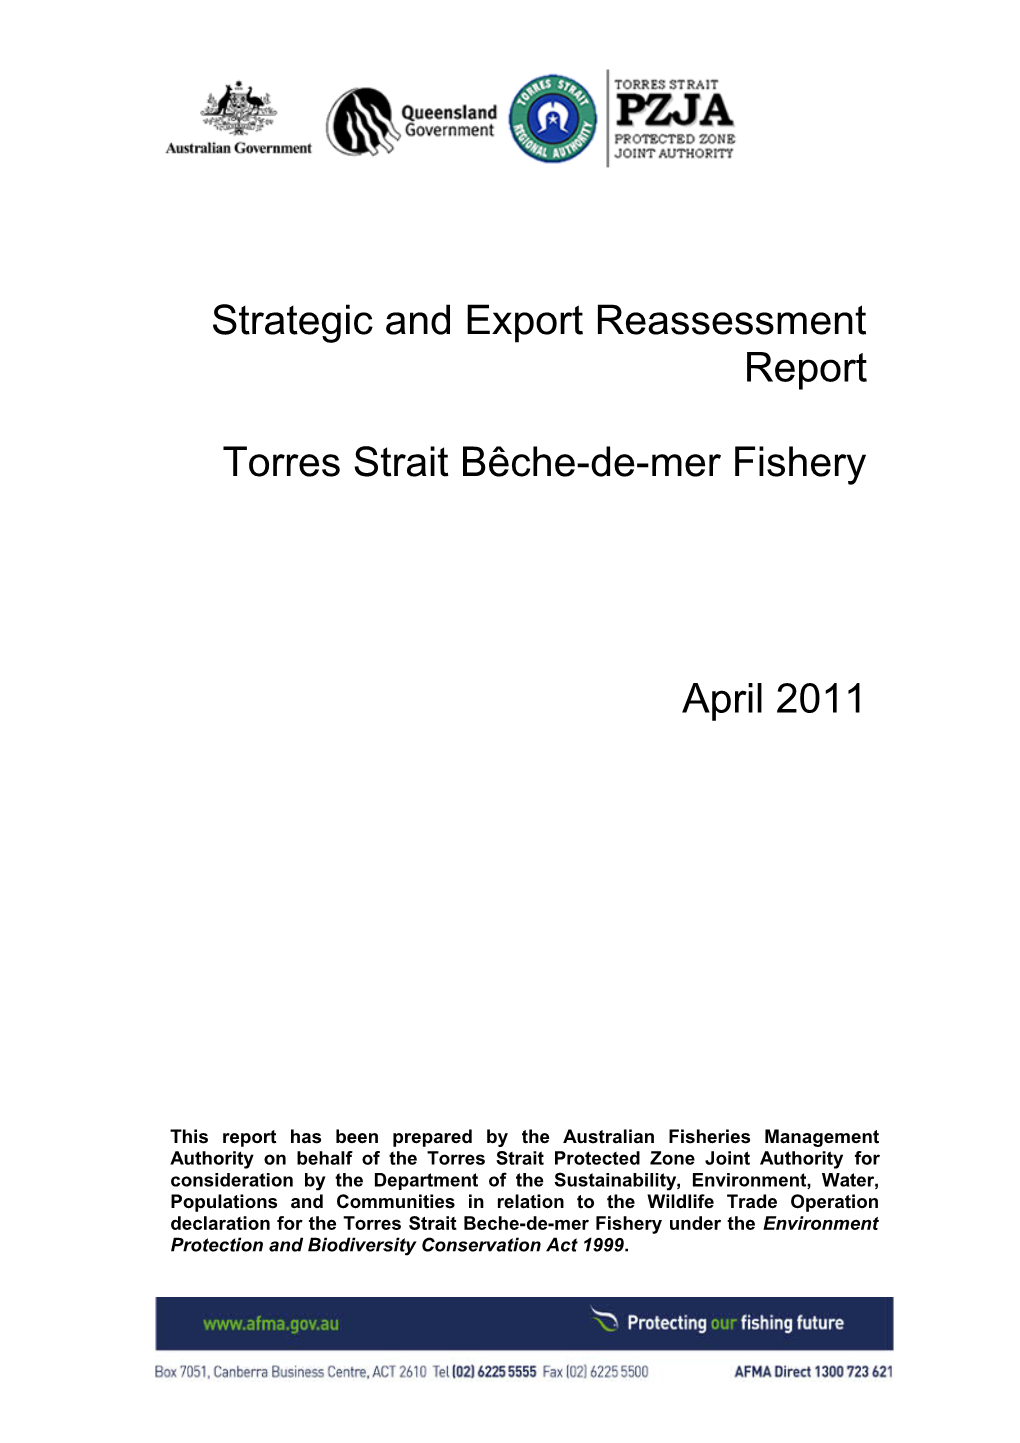 Torres Strait Bêche-De-Mer Fishery